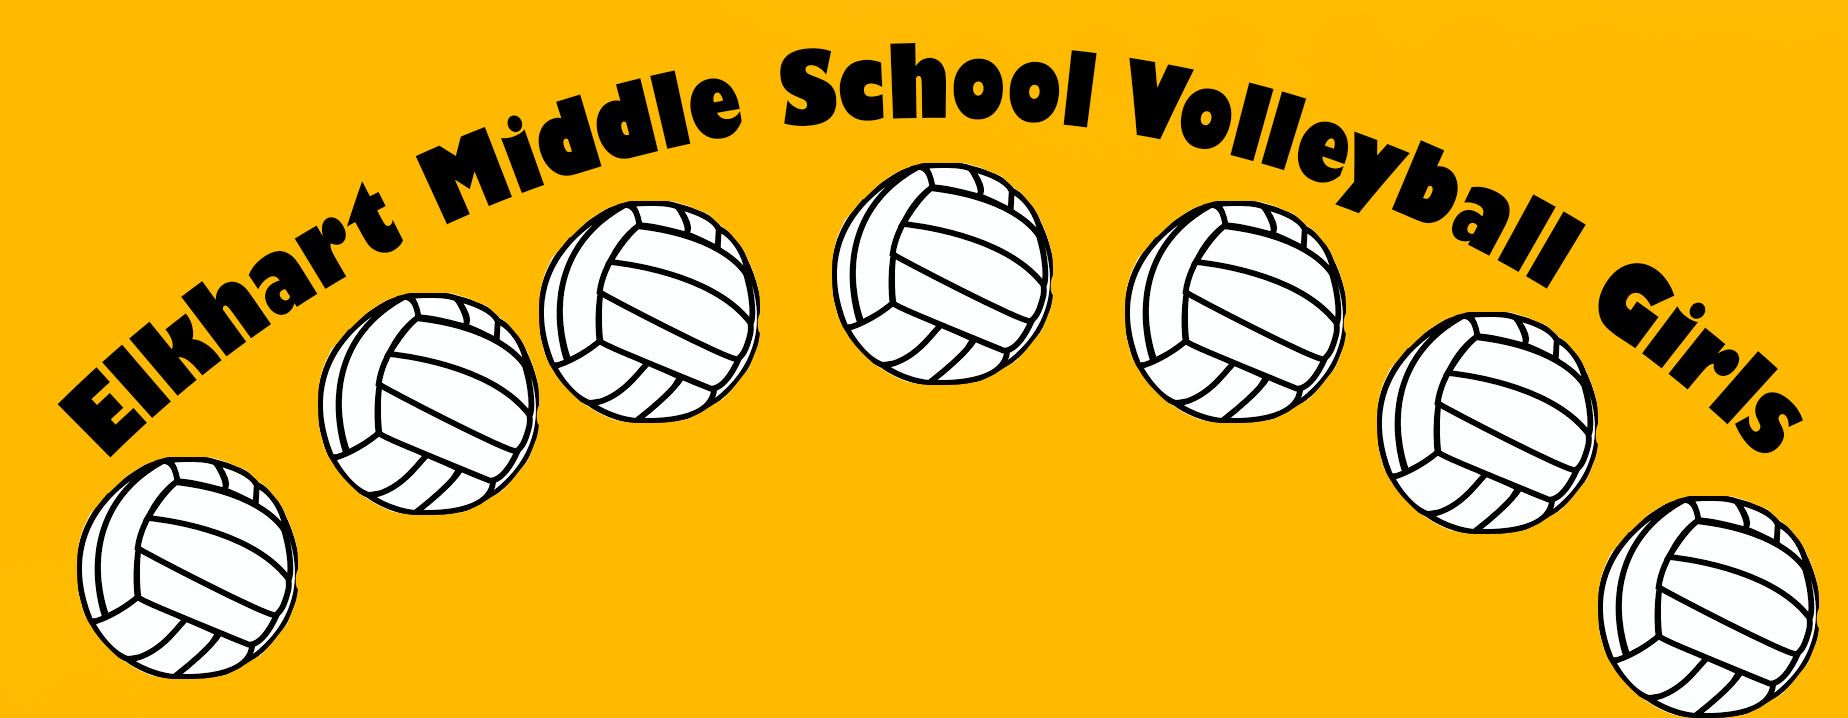 Elkhart middle school volleyball girls - Volleyball